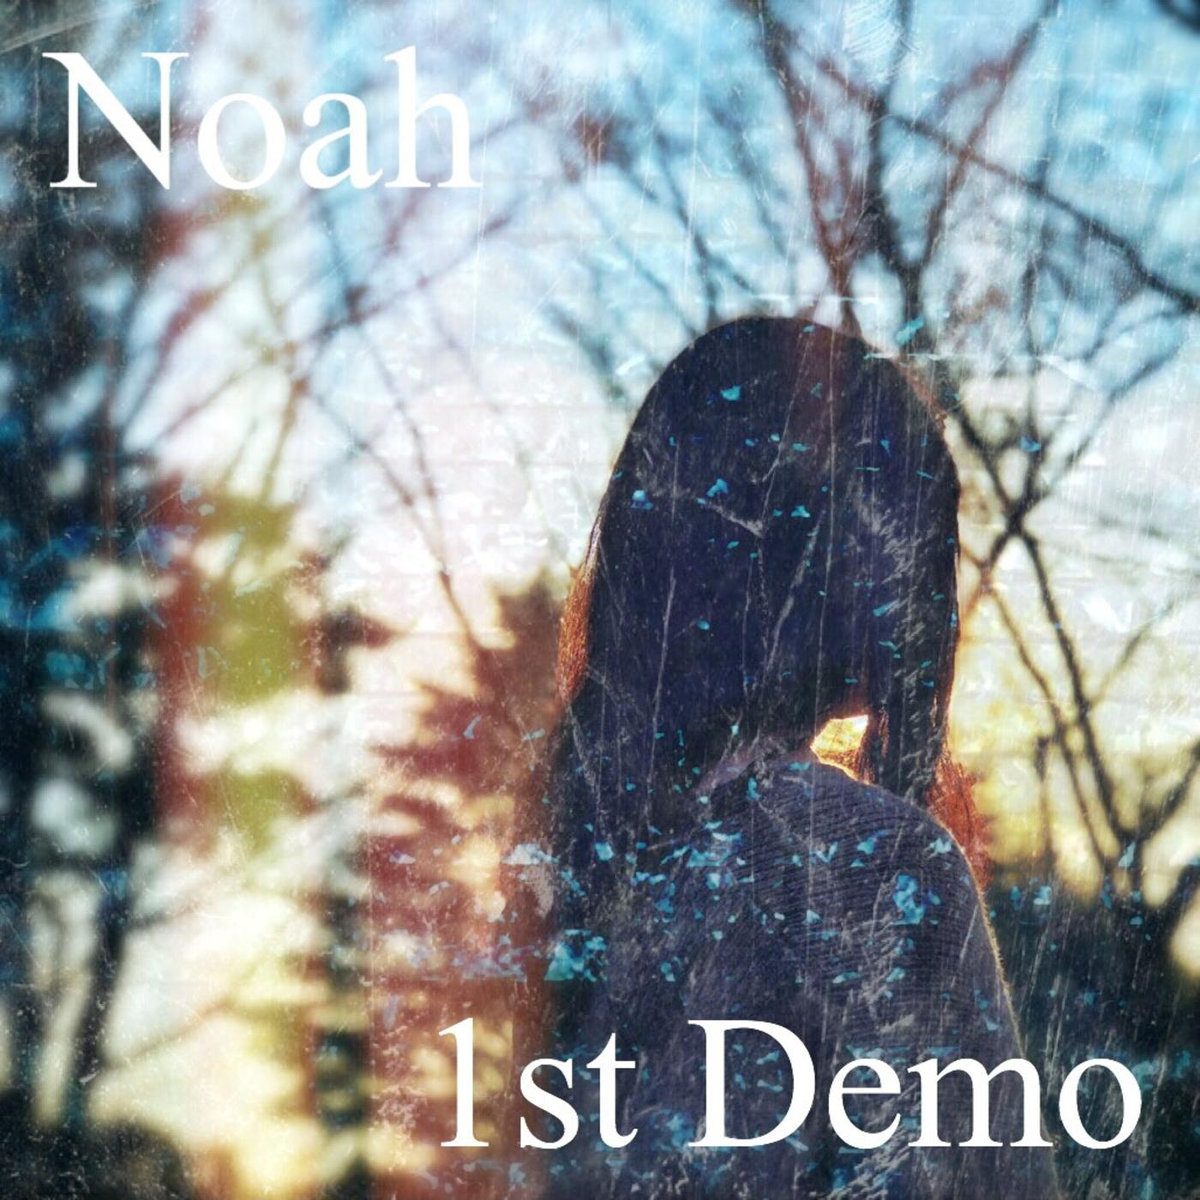 Noah – “1st Demo”